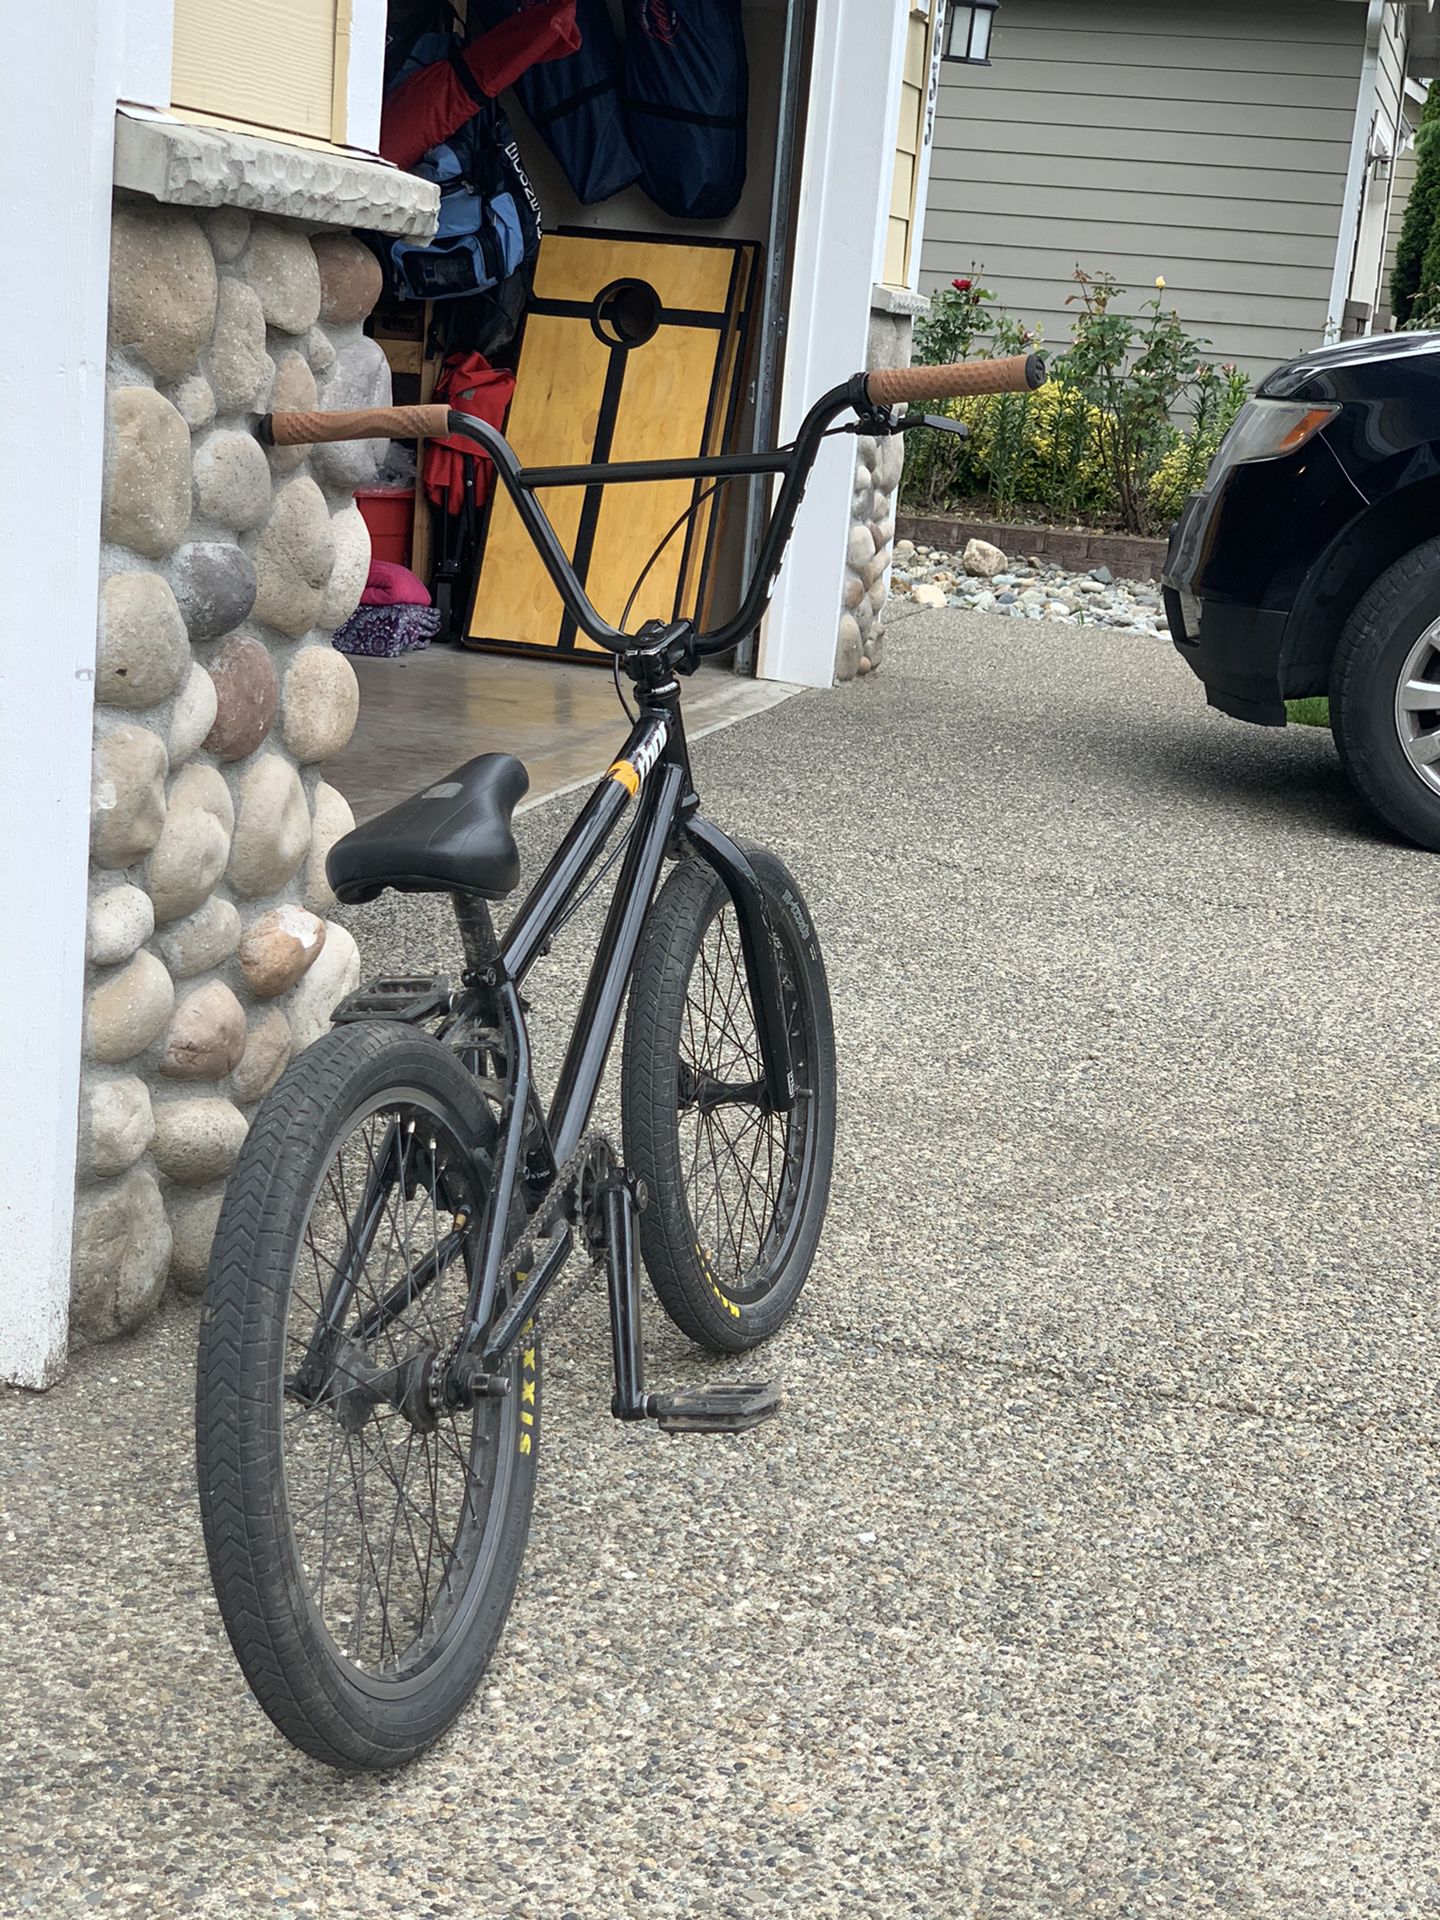 2018 20 inch redline bmx bike